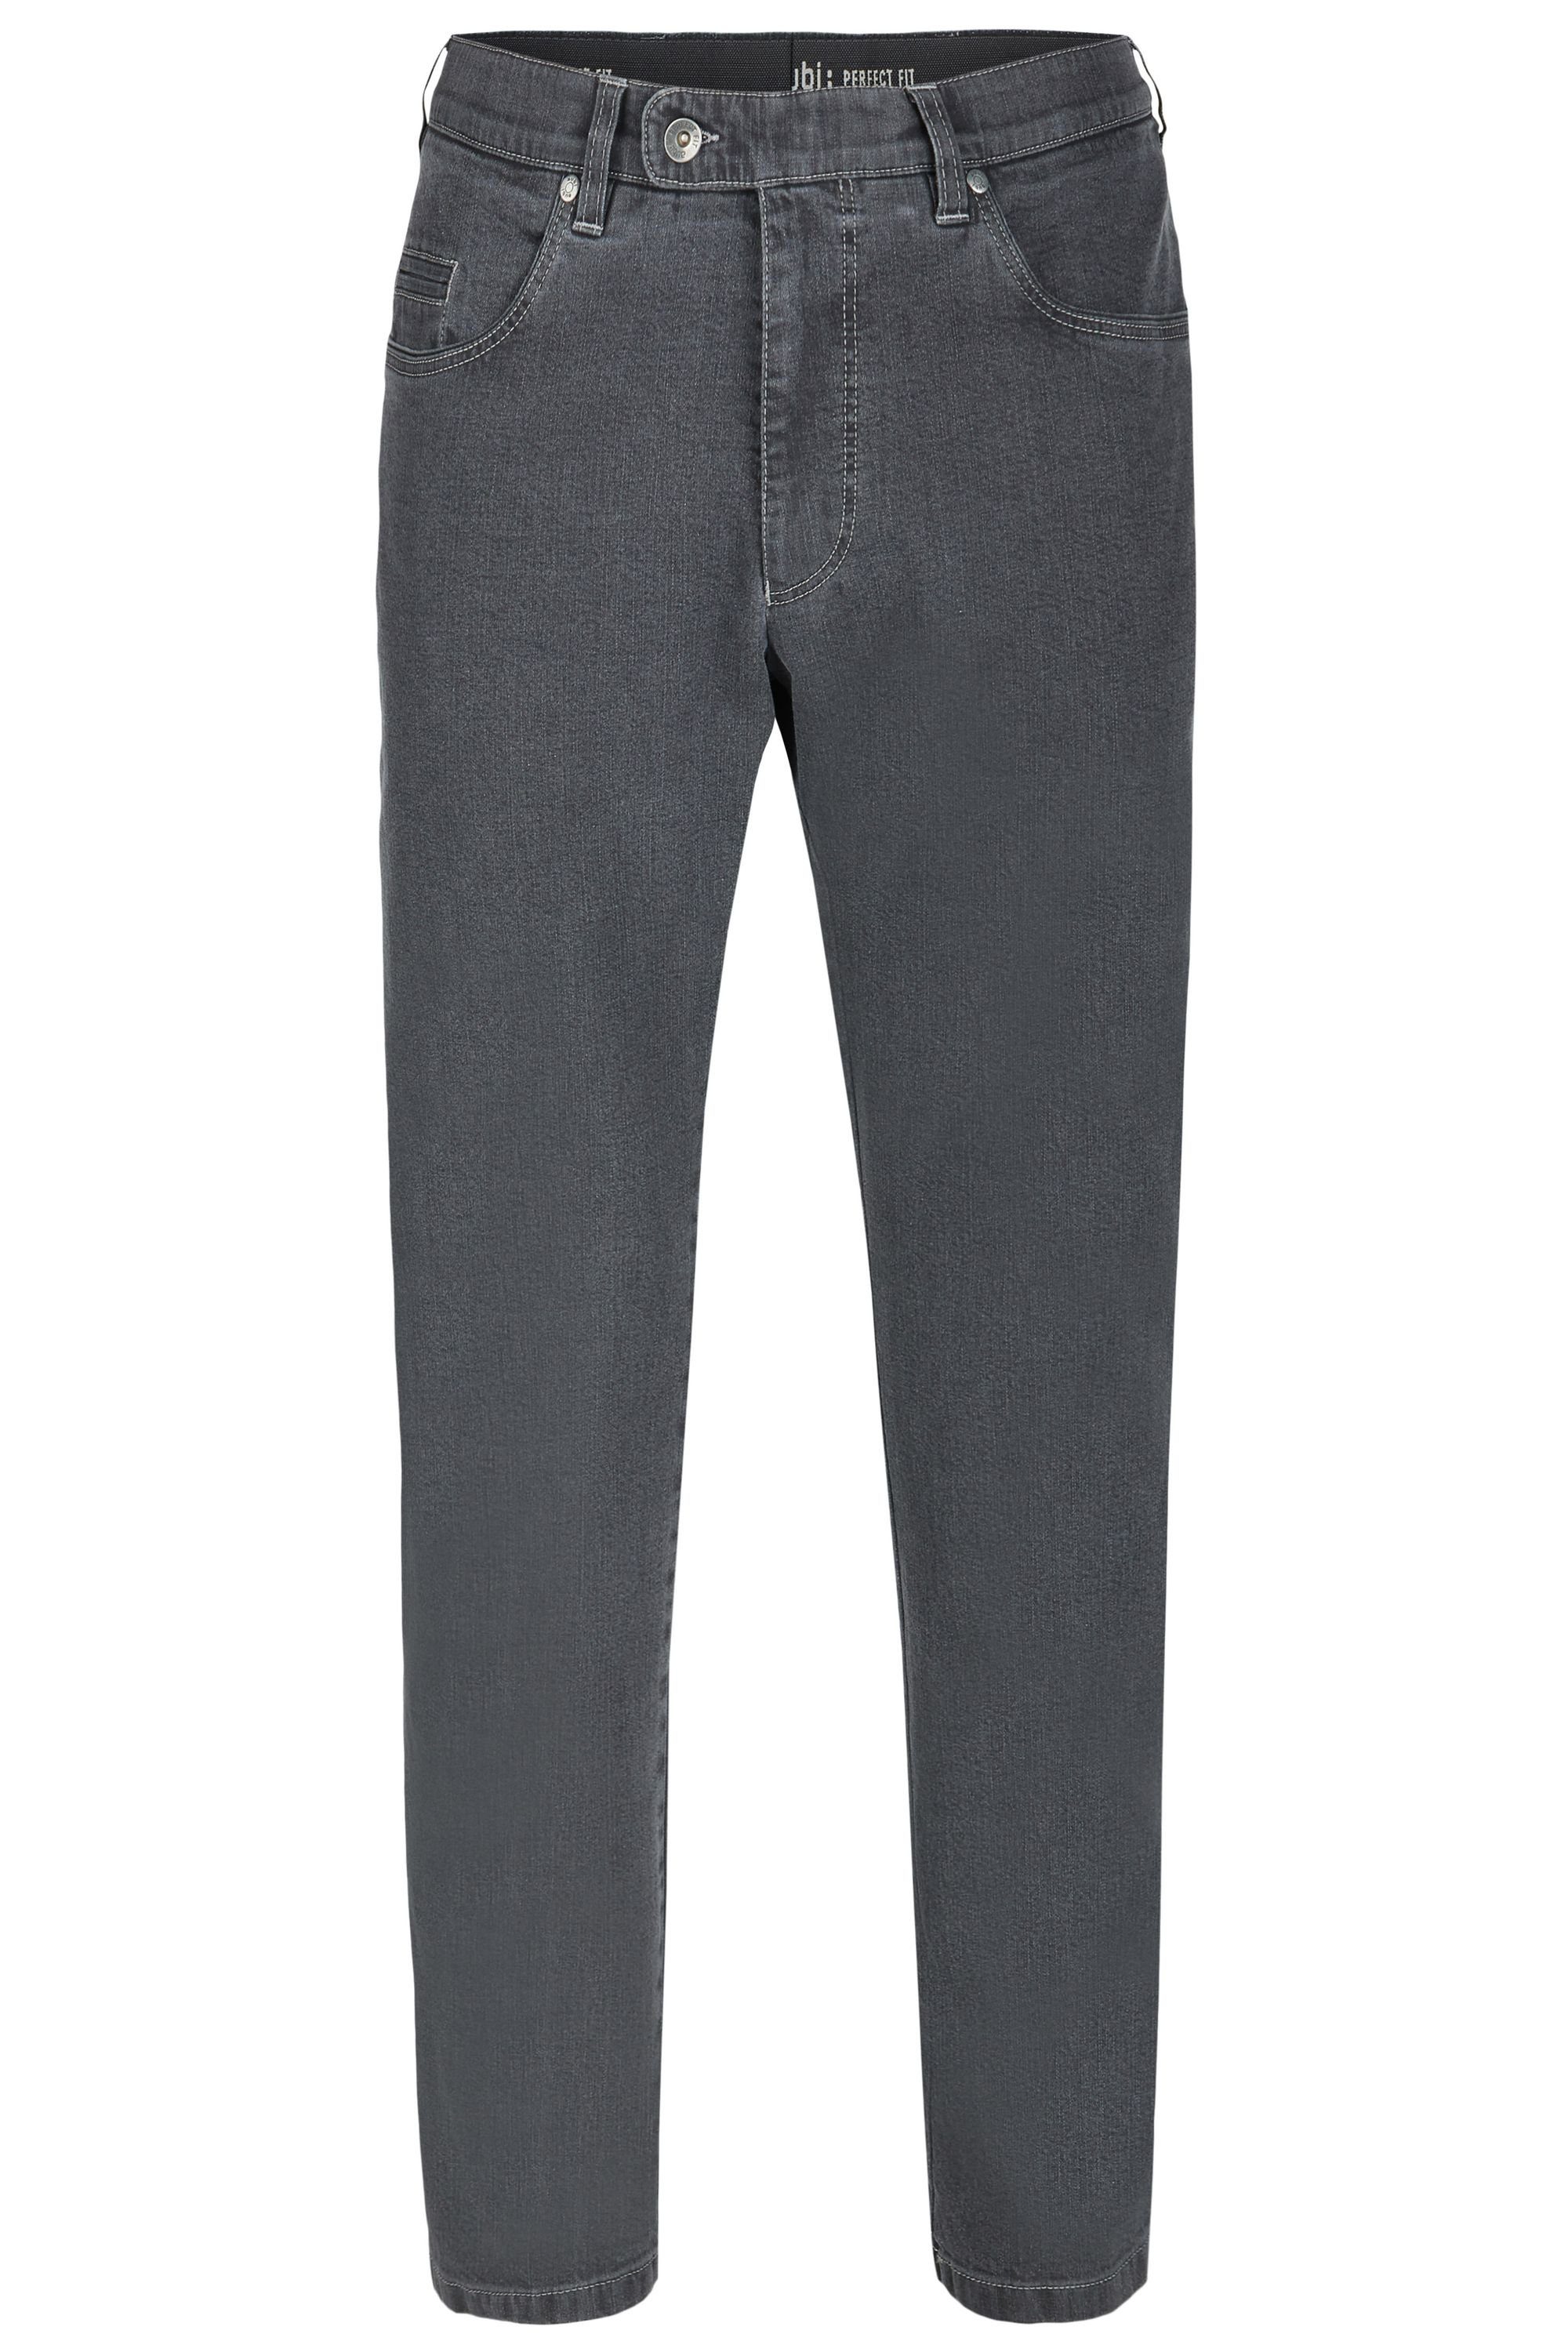 aubi: Herren Fit Stretch Jeans (53) aubi Bequeme Modell 577 grey Hose Perfect Jeans